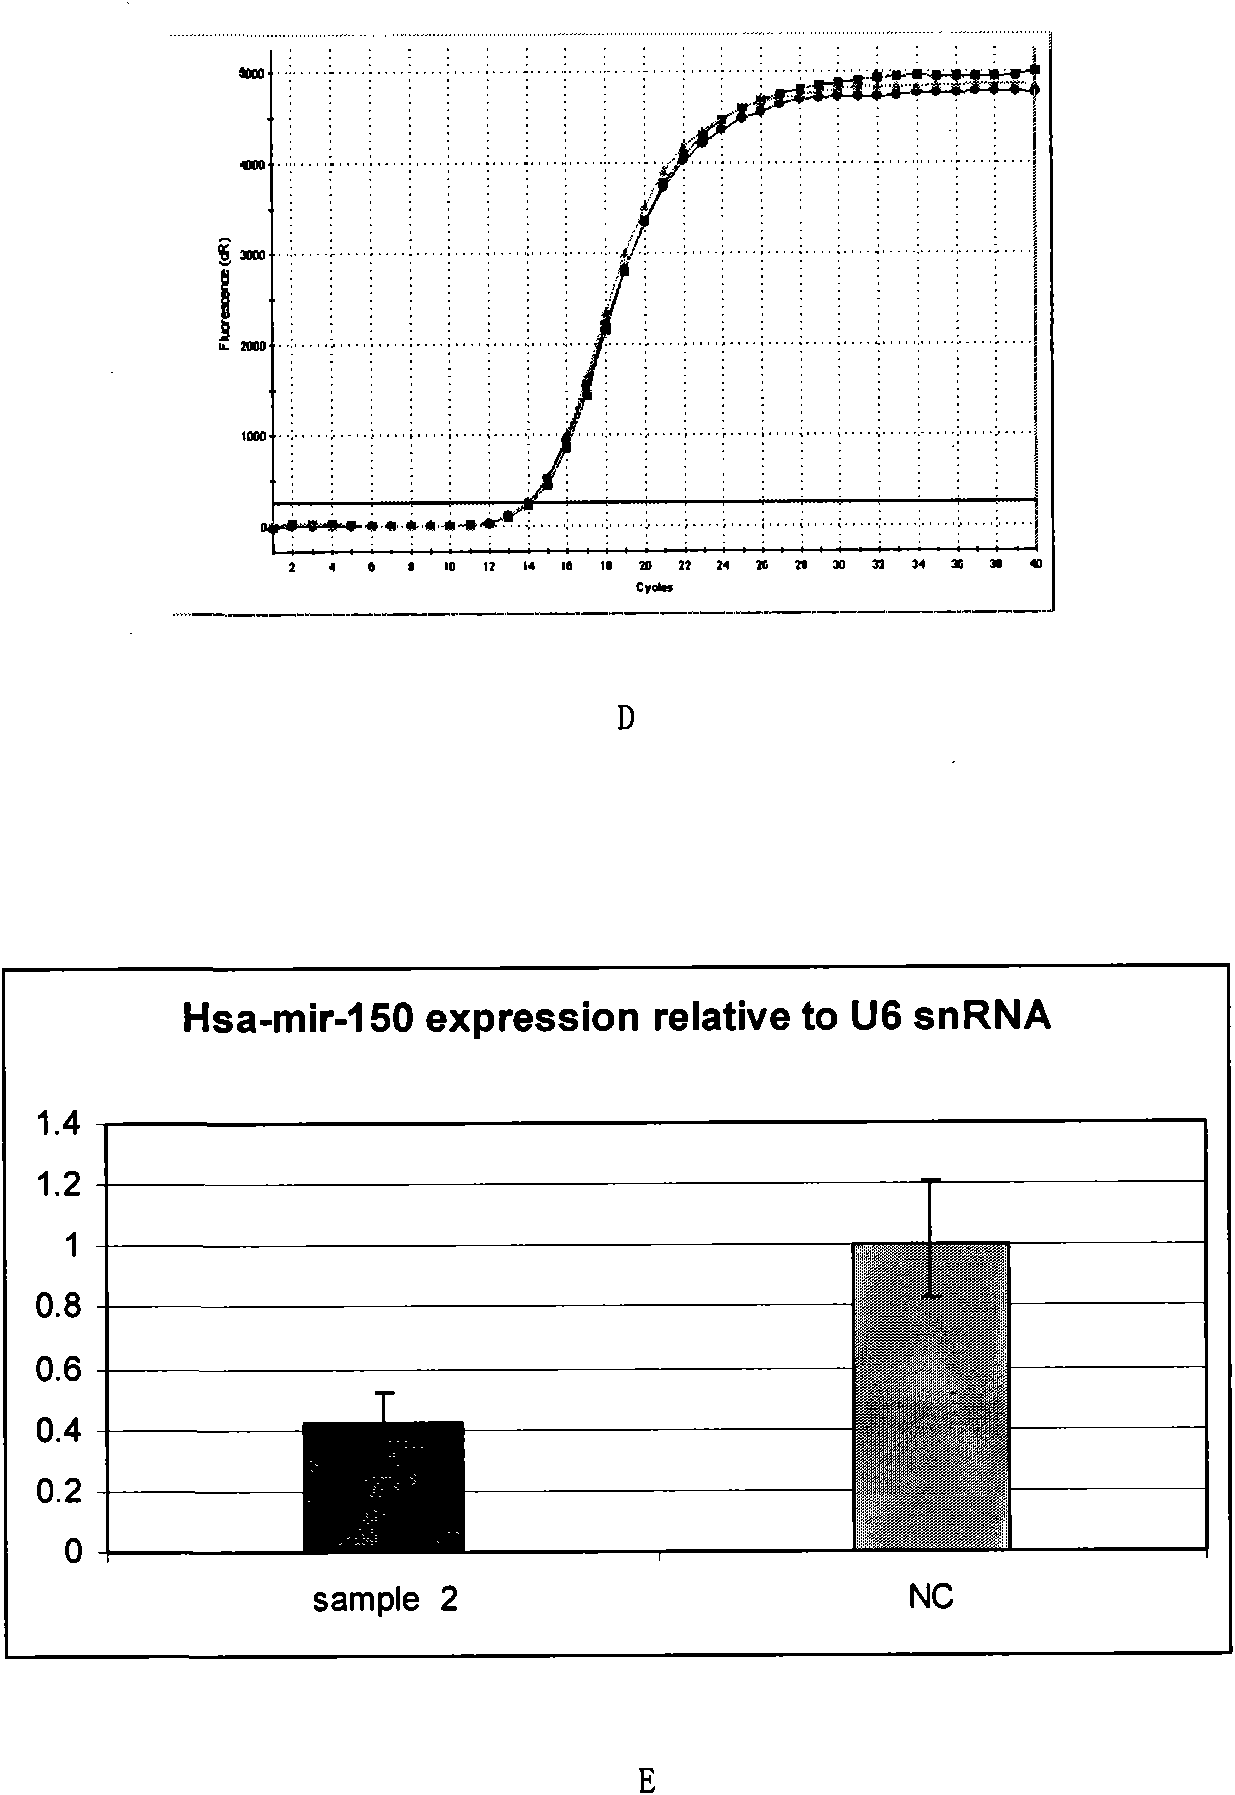 Human miR-150 antisense nucleic acid and application thereof